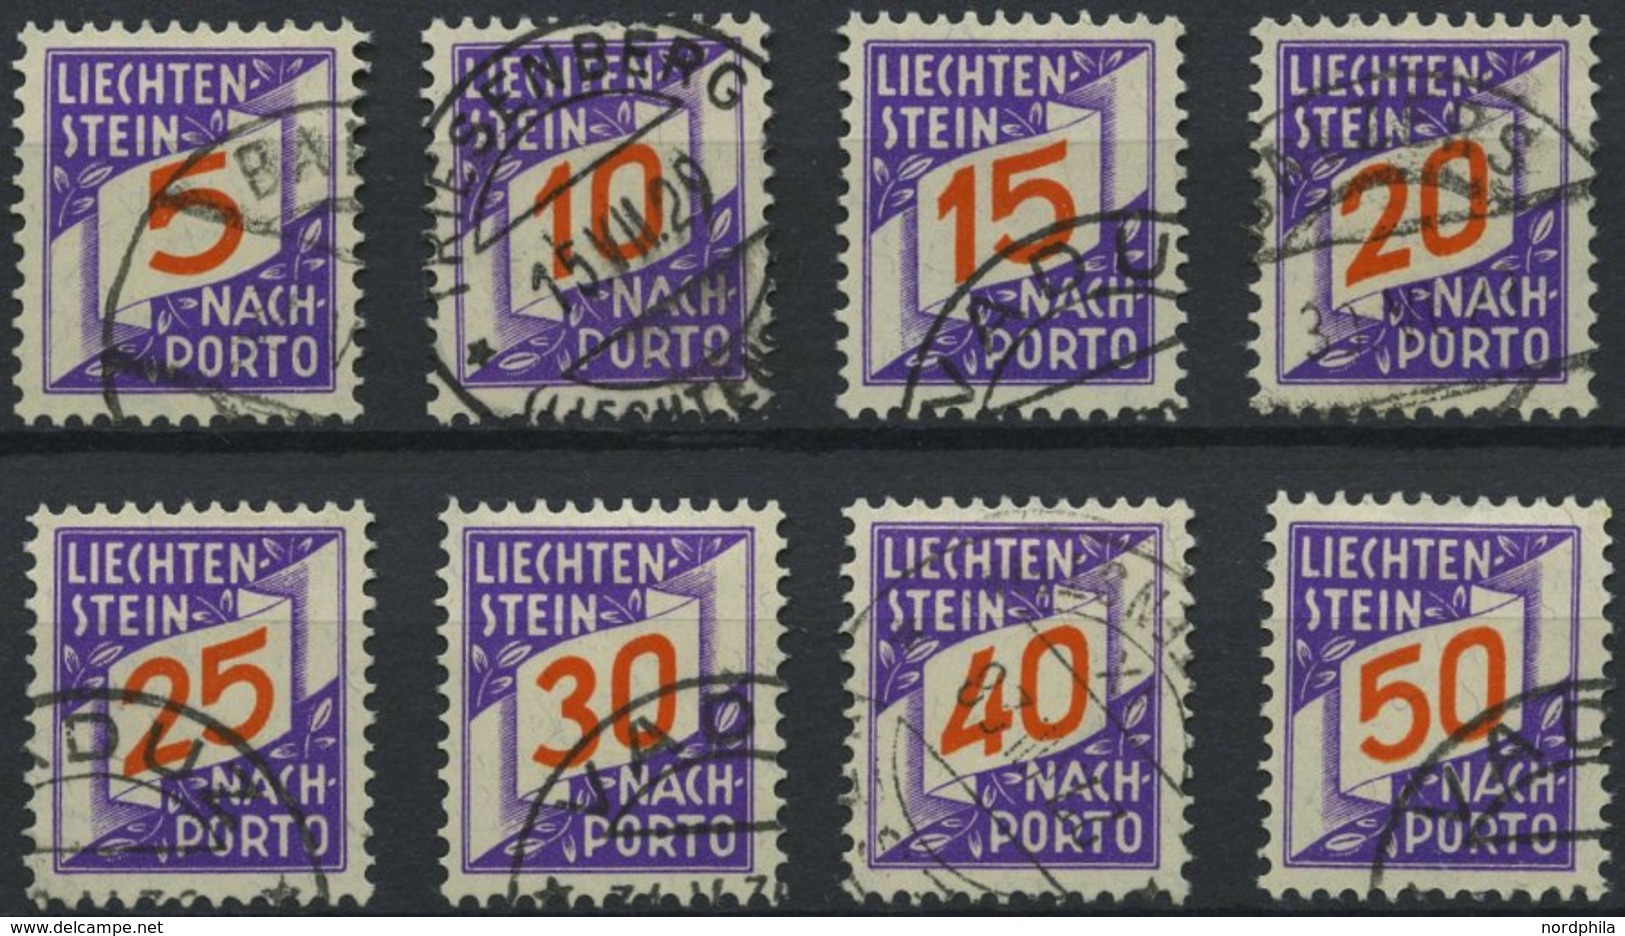 PORTOMARKEN P 13-20 O, 1928, Ziffer Mit Band, Prachtsatz, Mi. 100.- - Taxe